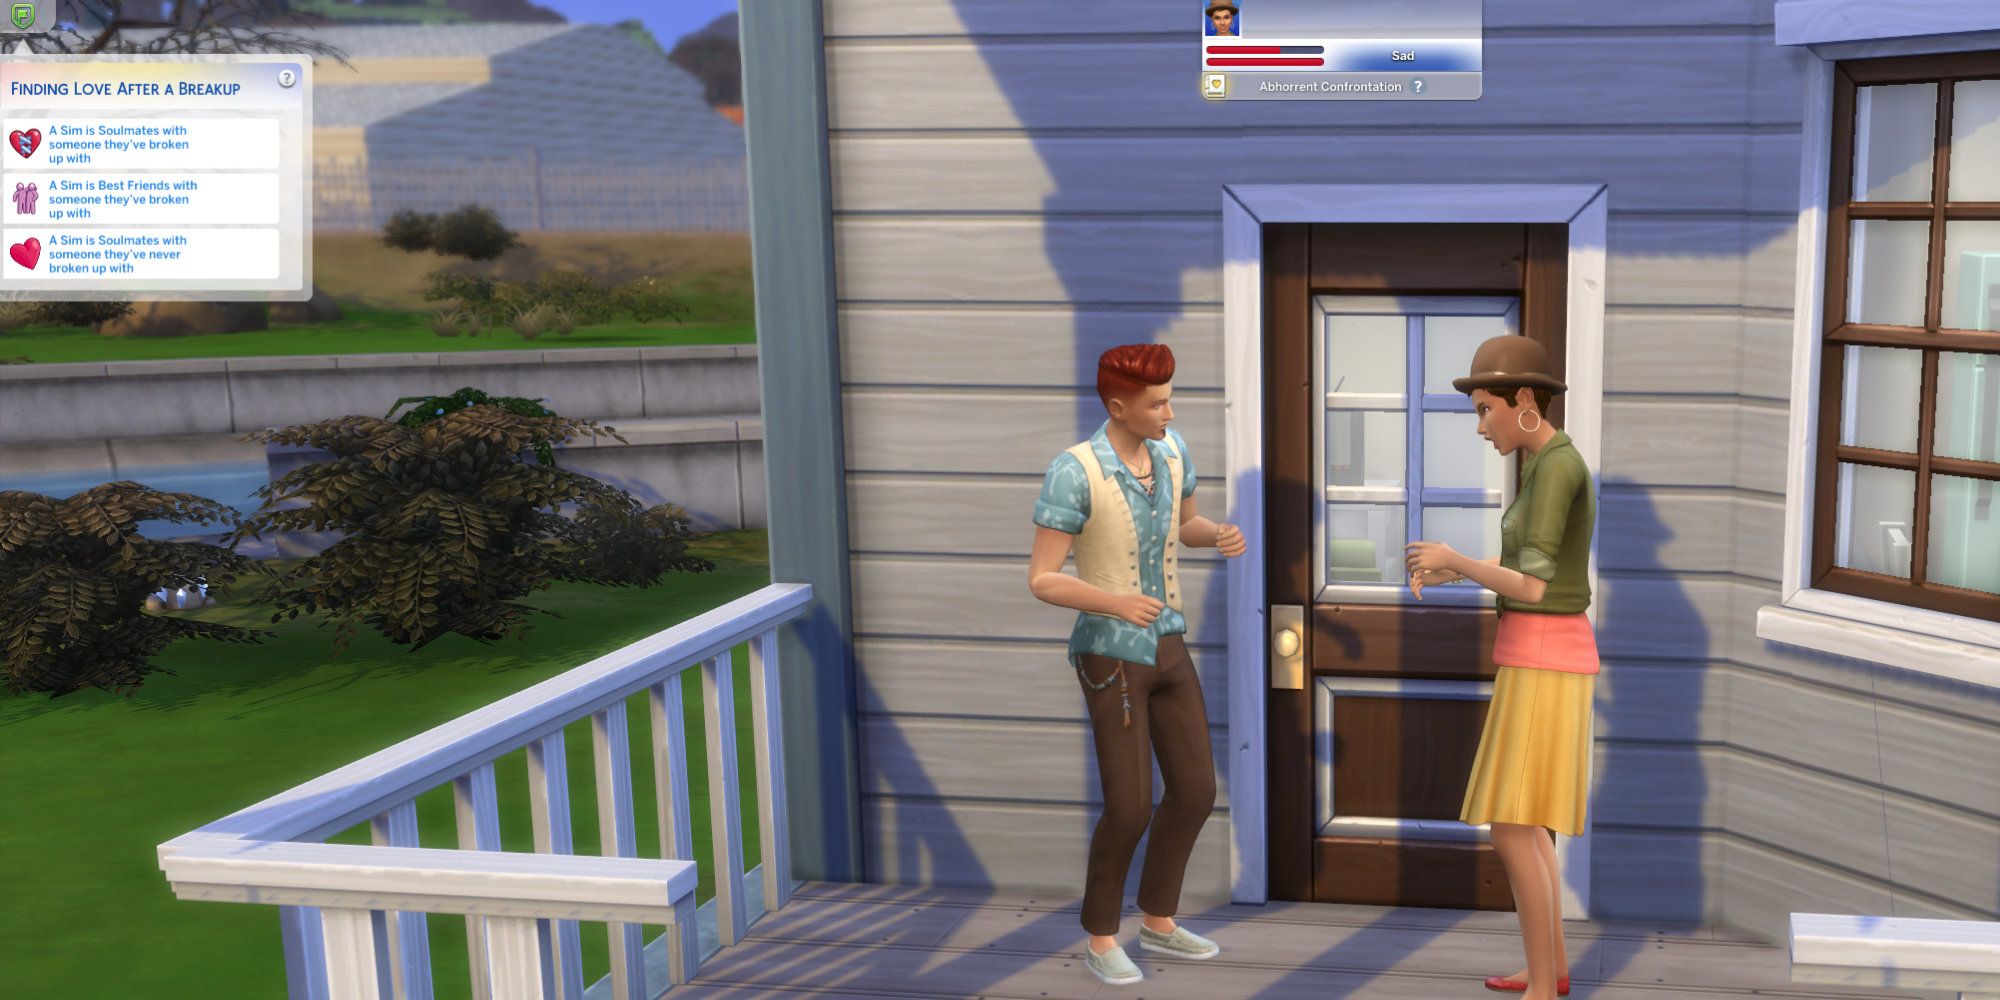 Sims 4 sims arguing after breakup in scenario